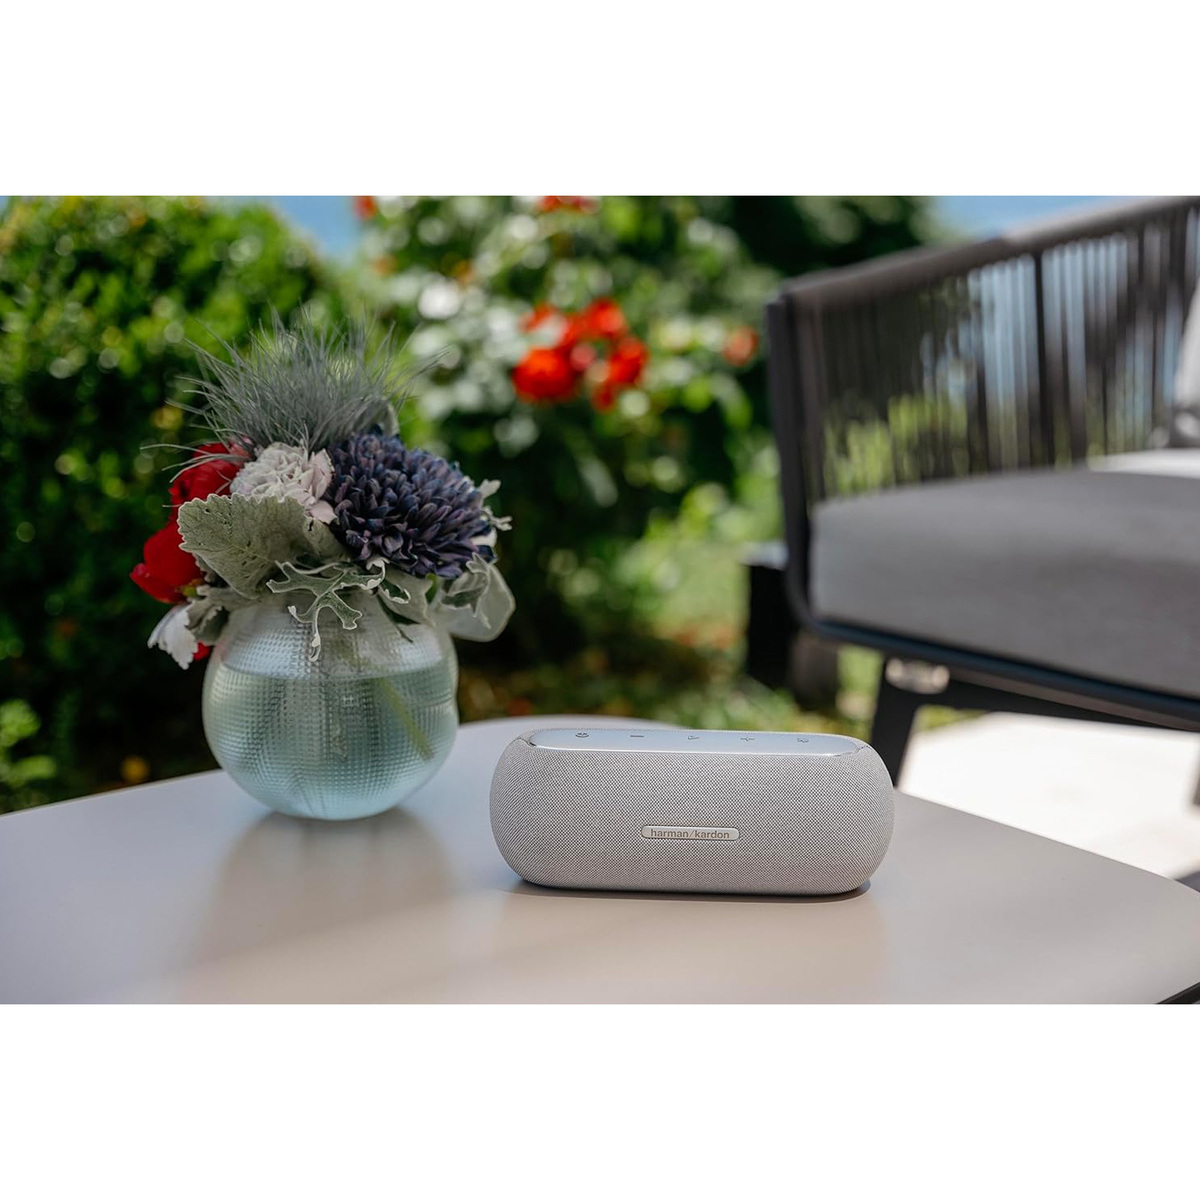 Harman Kardon Luna Elegant Portable Bluetooth Speaker, Grey, HKLUNAGRY